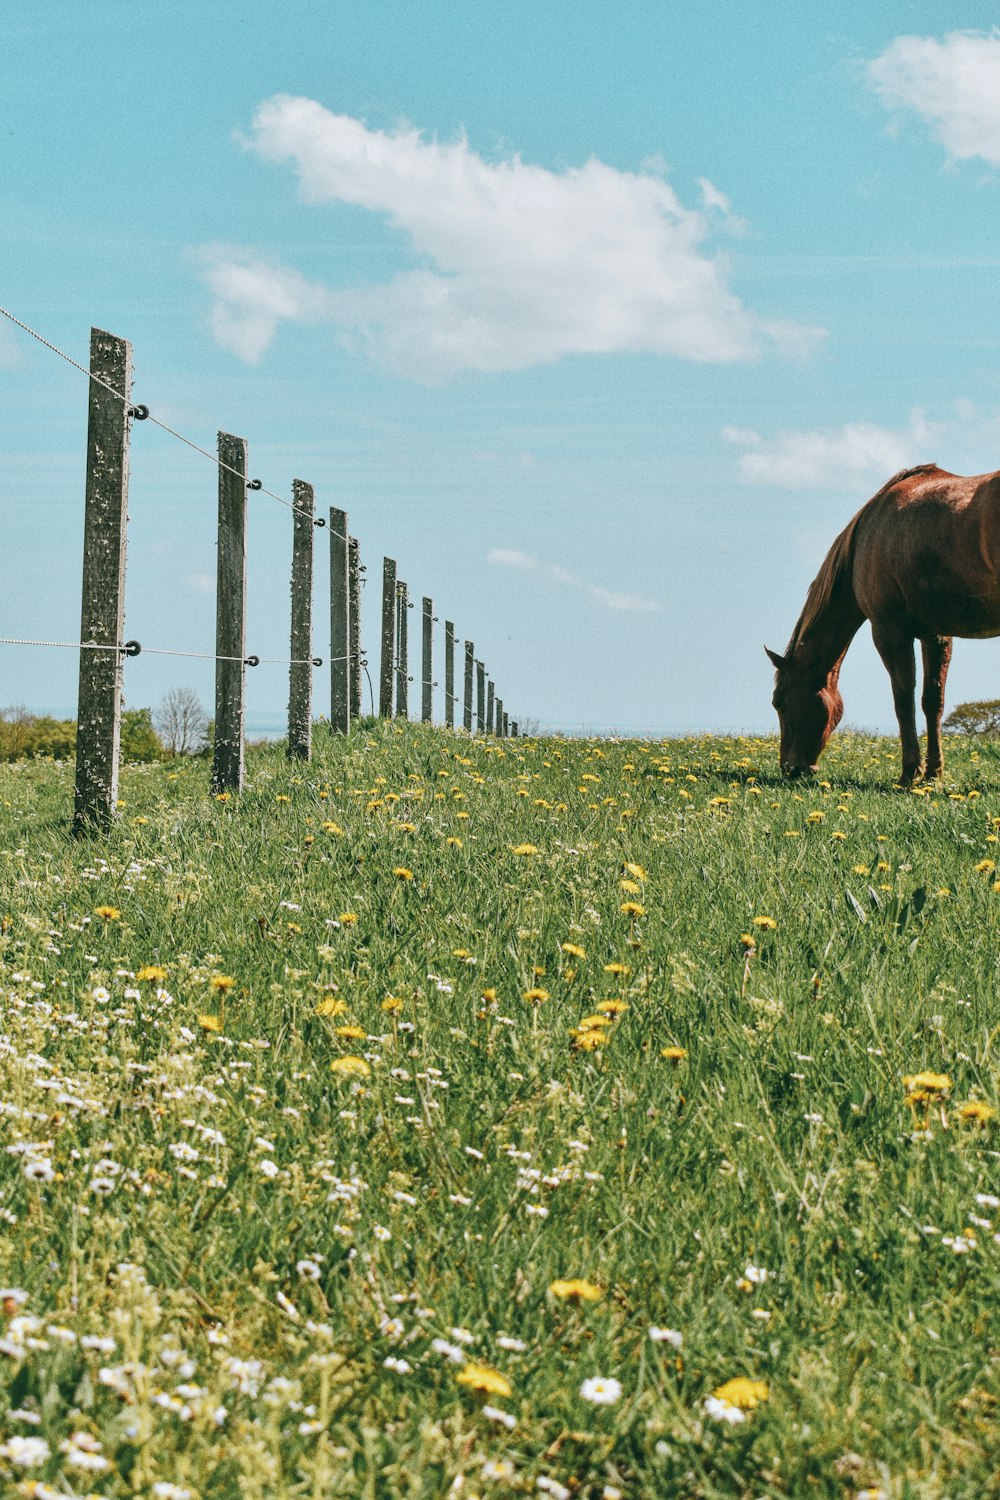 Braunes Pferd frisst tagsüber Gras auf grünem Grasfeld